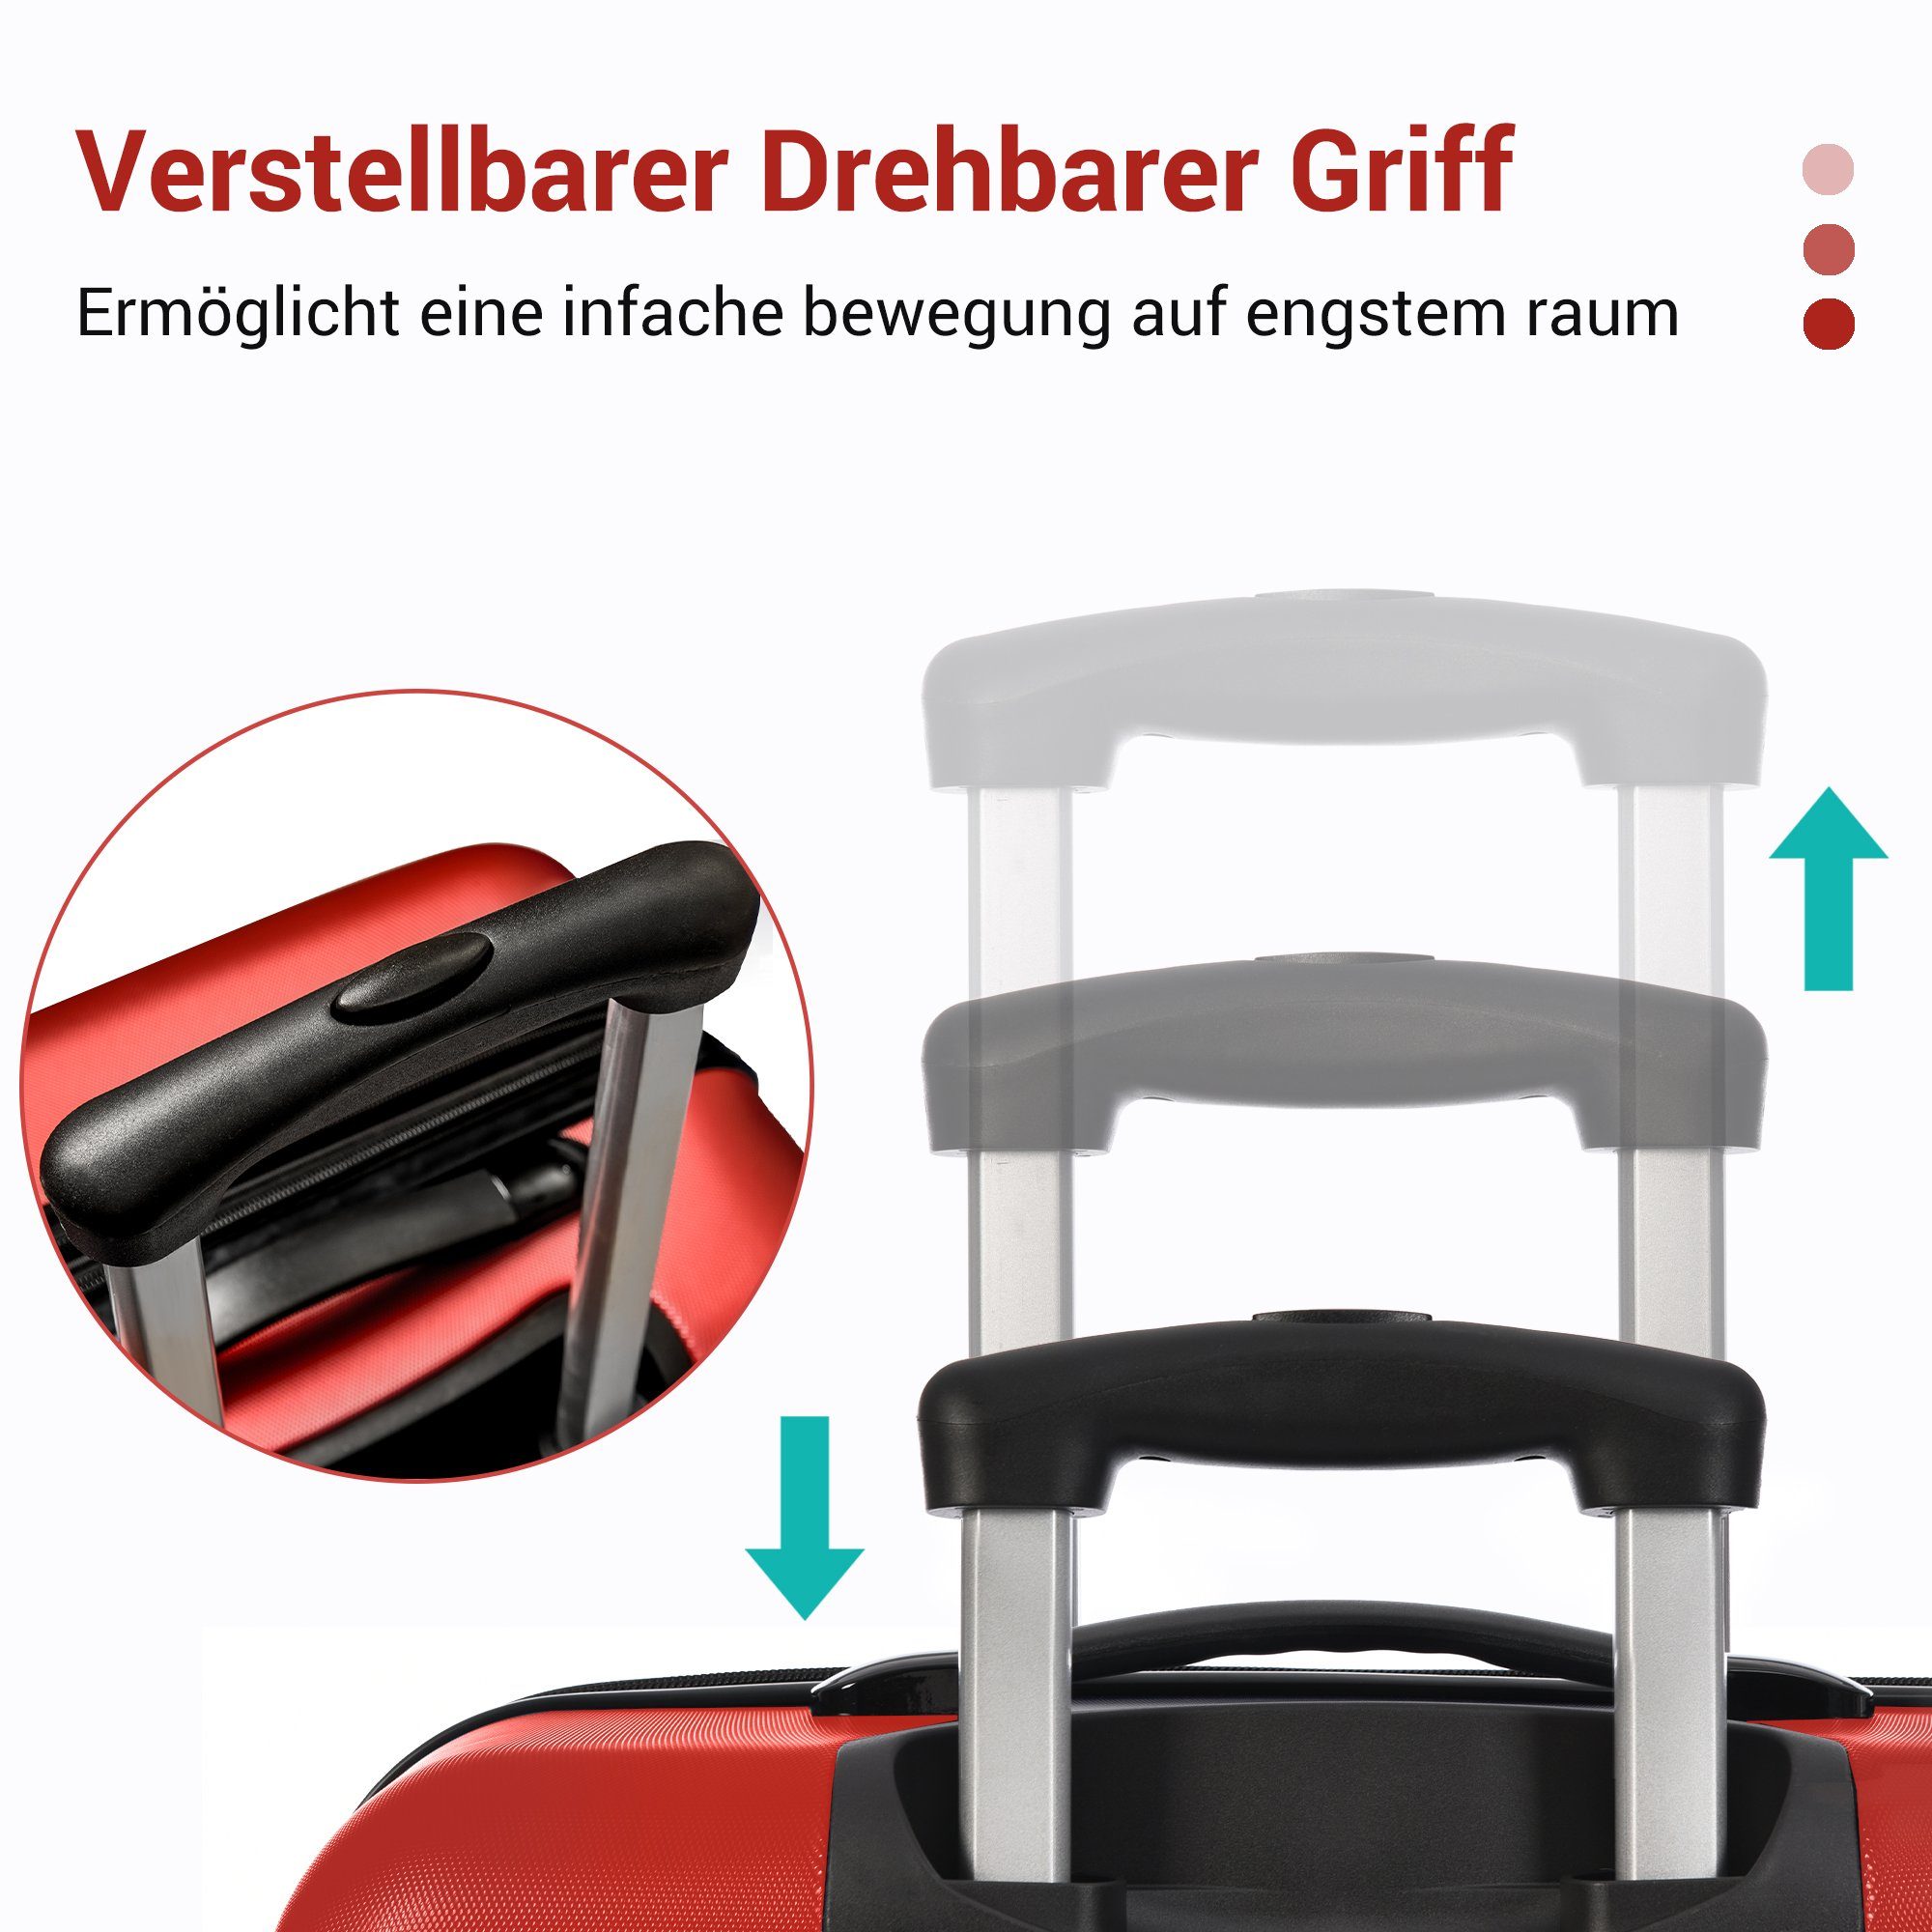 Rollen, 4 Reisekoffer, Handgepäck ABS-Material Flieks Rot Hartschalenkoffer Trolley Hartschalen-Trolley,